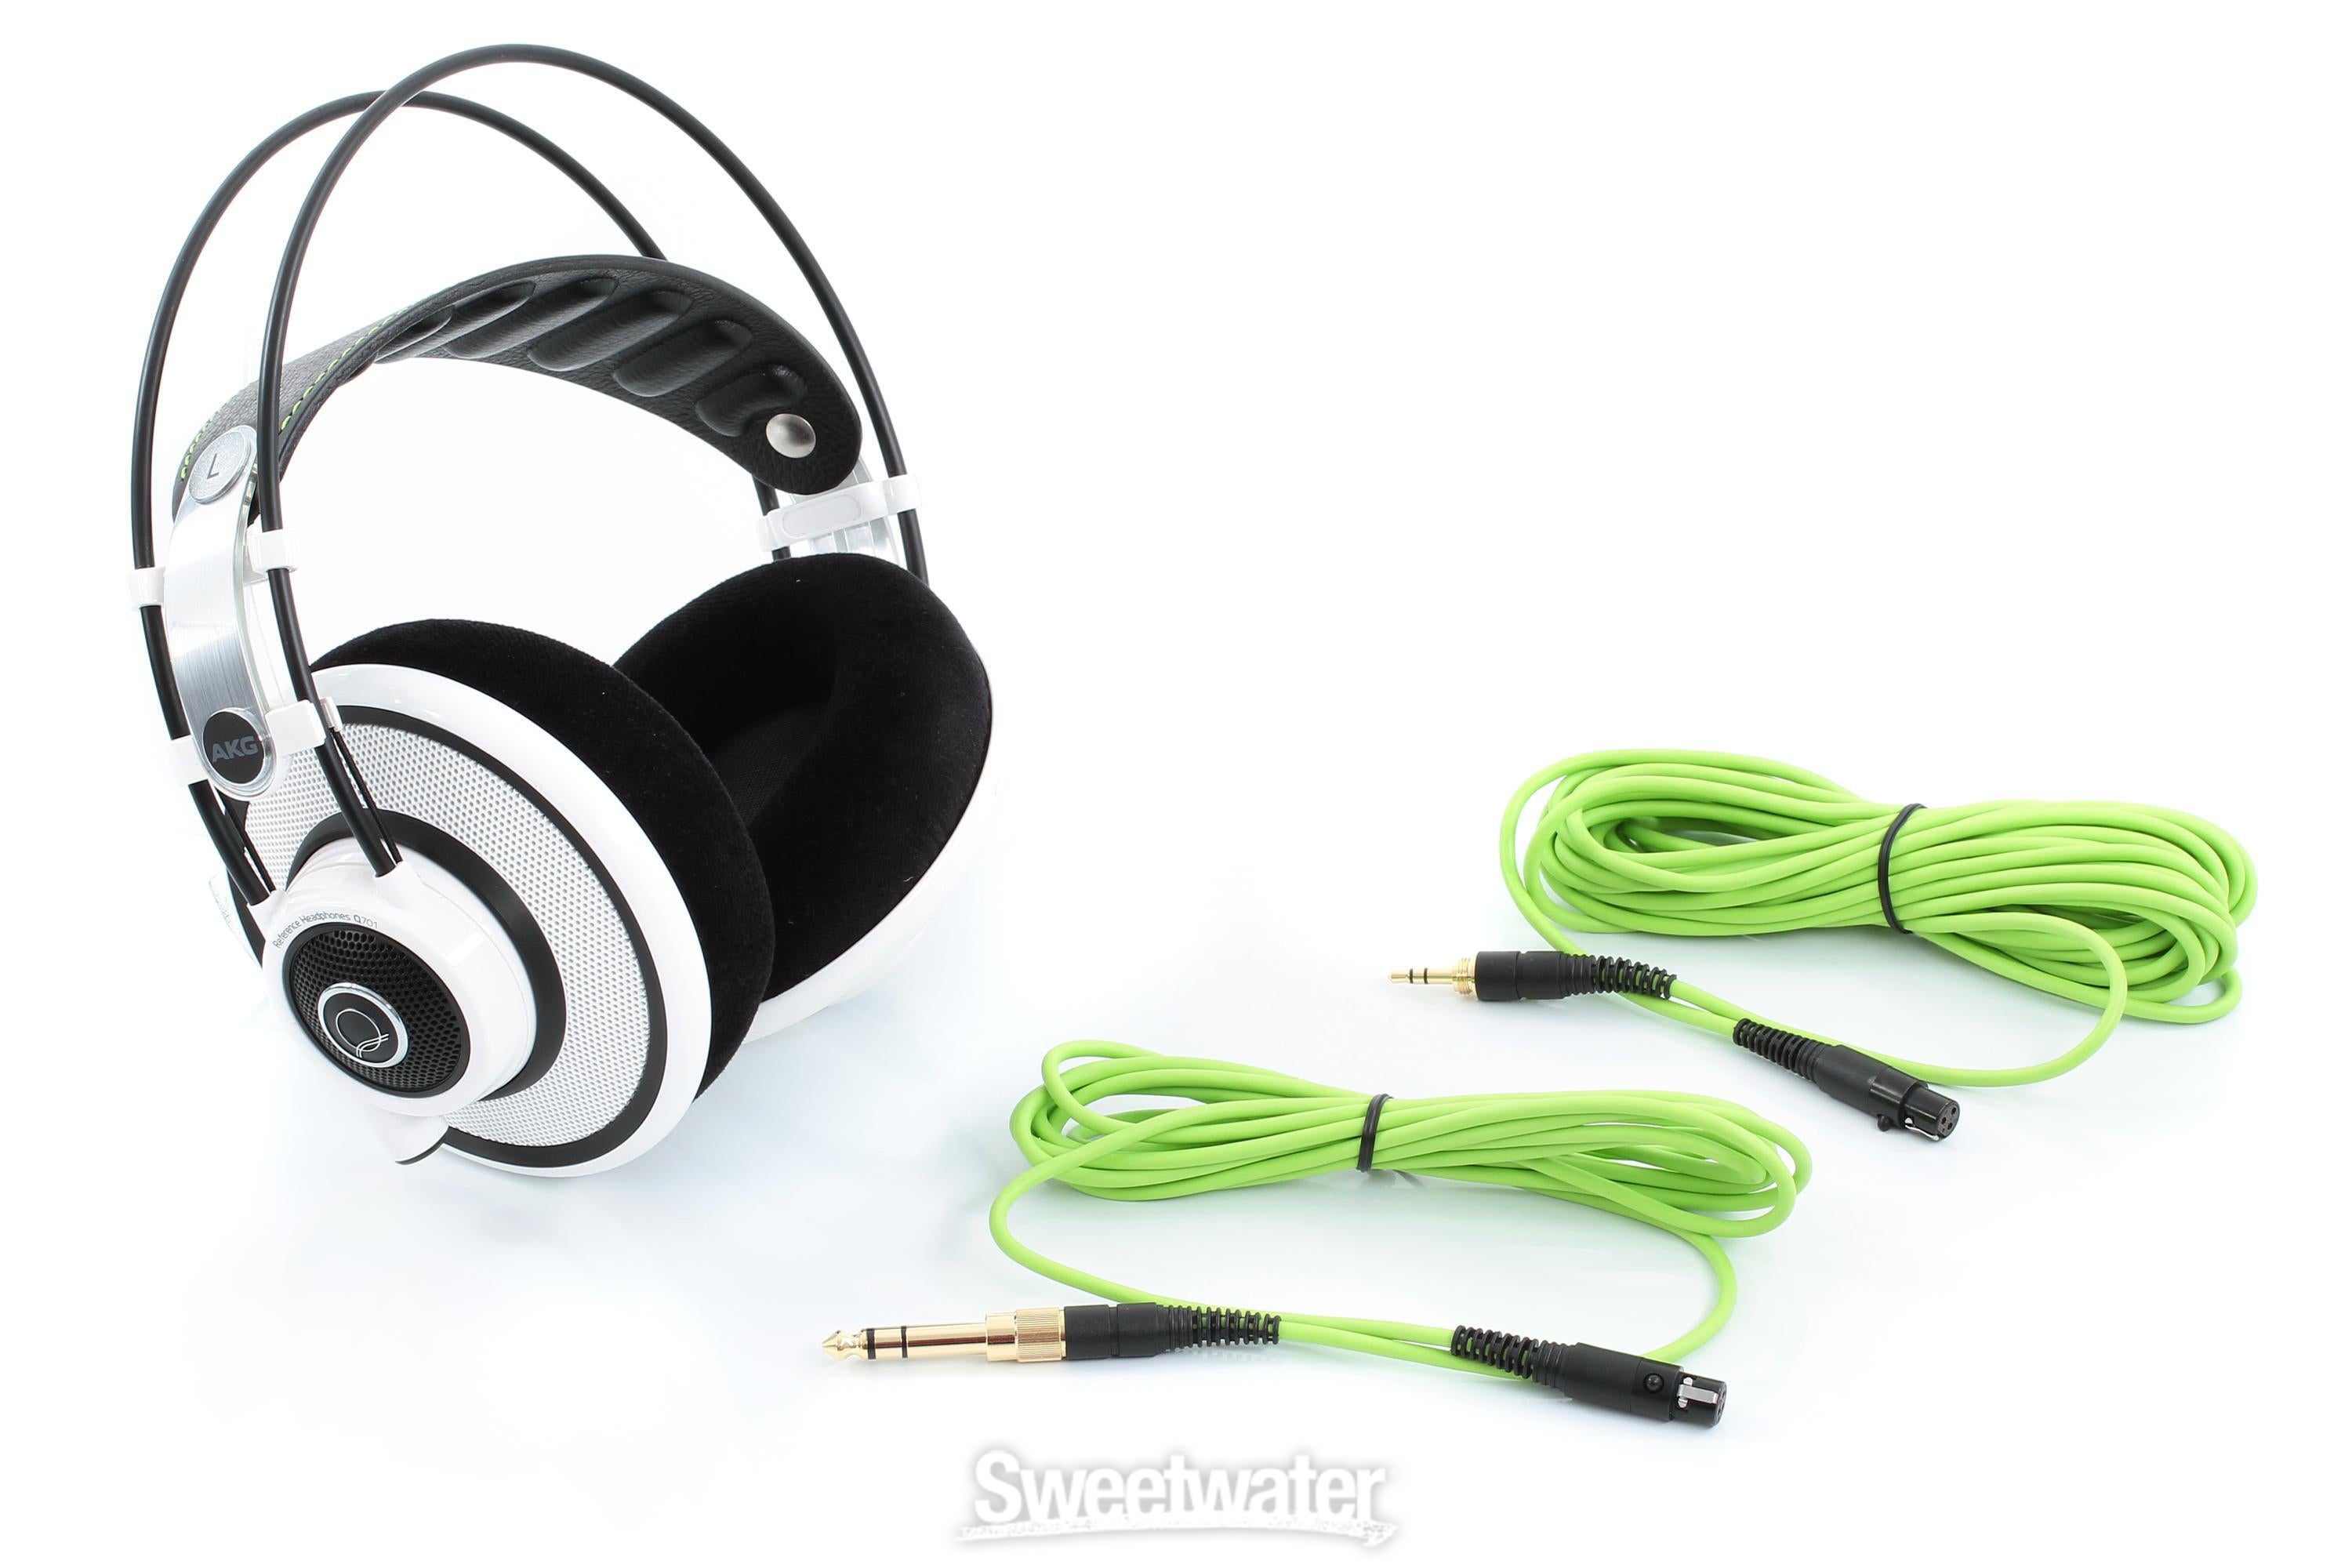 AKG Quincy Jones Q701 Stereo Headphones, White - Semi-open